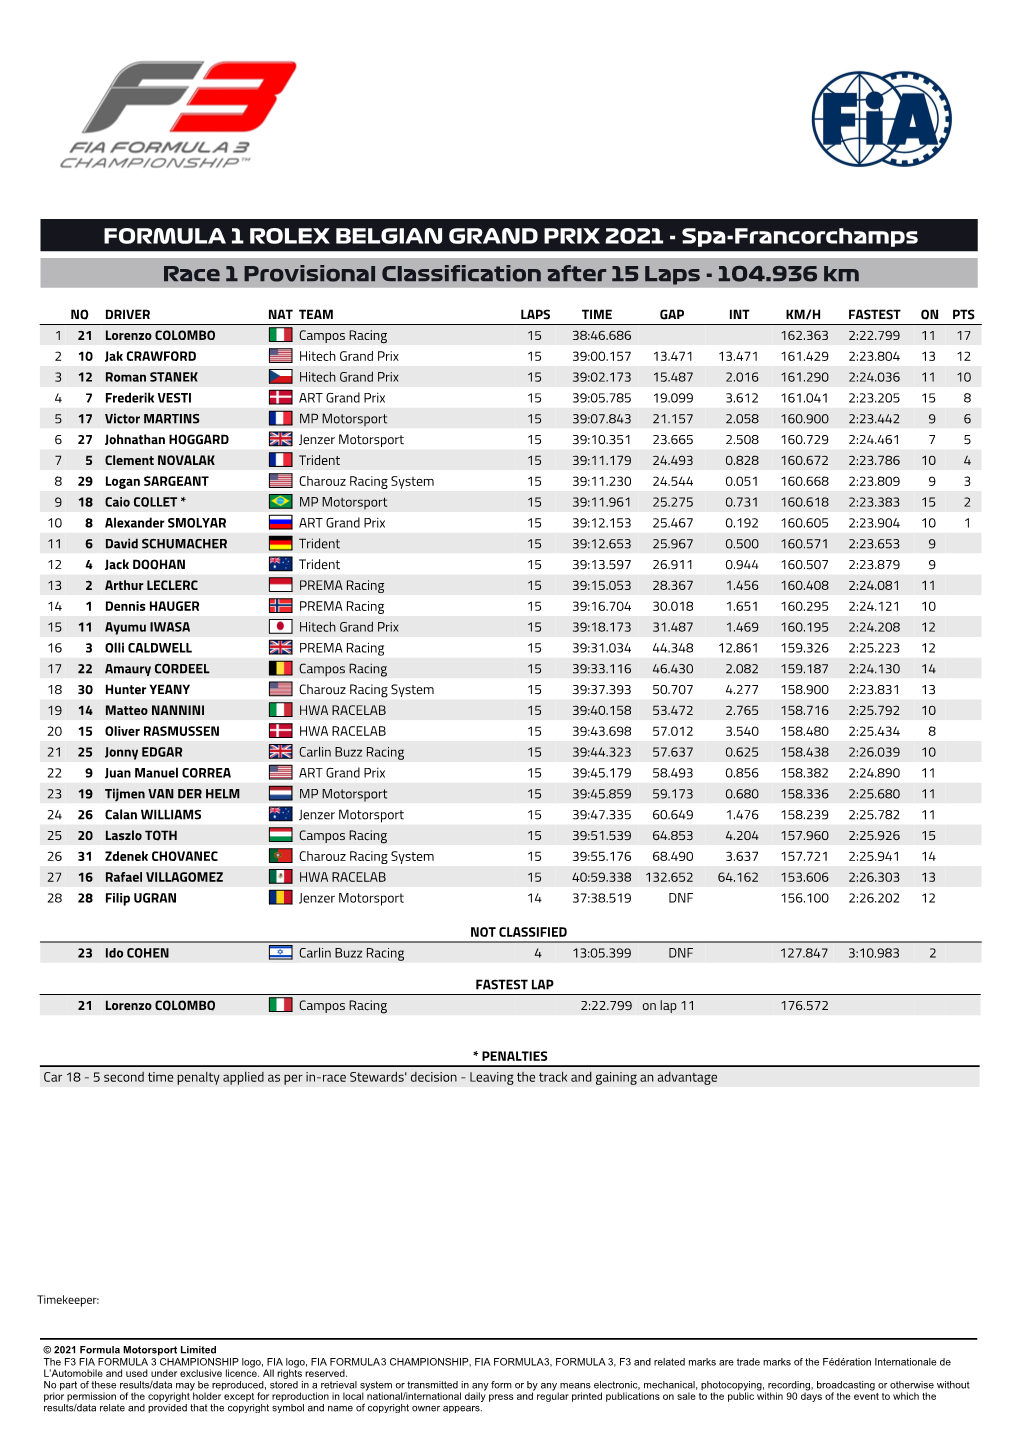 FORMULA 1 ROLEX BELGIAN GRAND PRIX 2021 - Spa-Francorchamps Race 1 Provisional Classification After 15 Laps - 104.936 Km